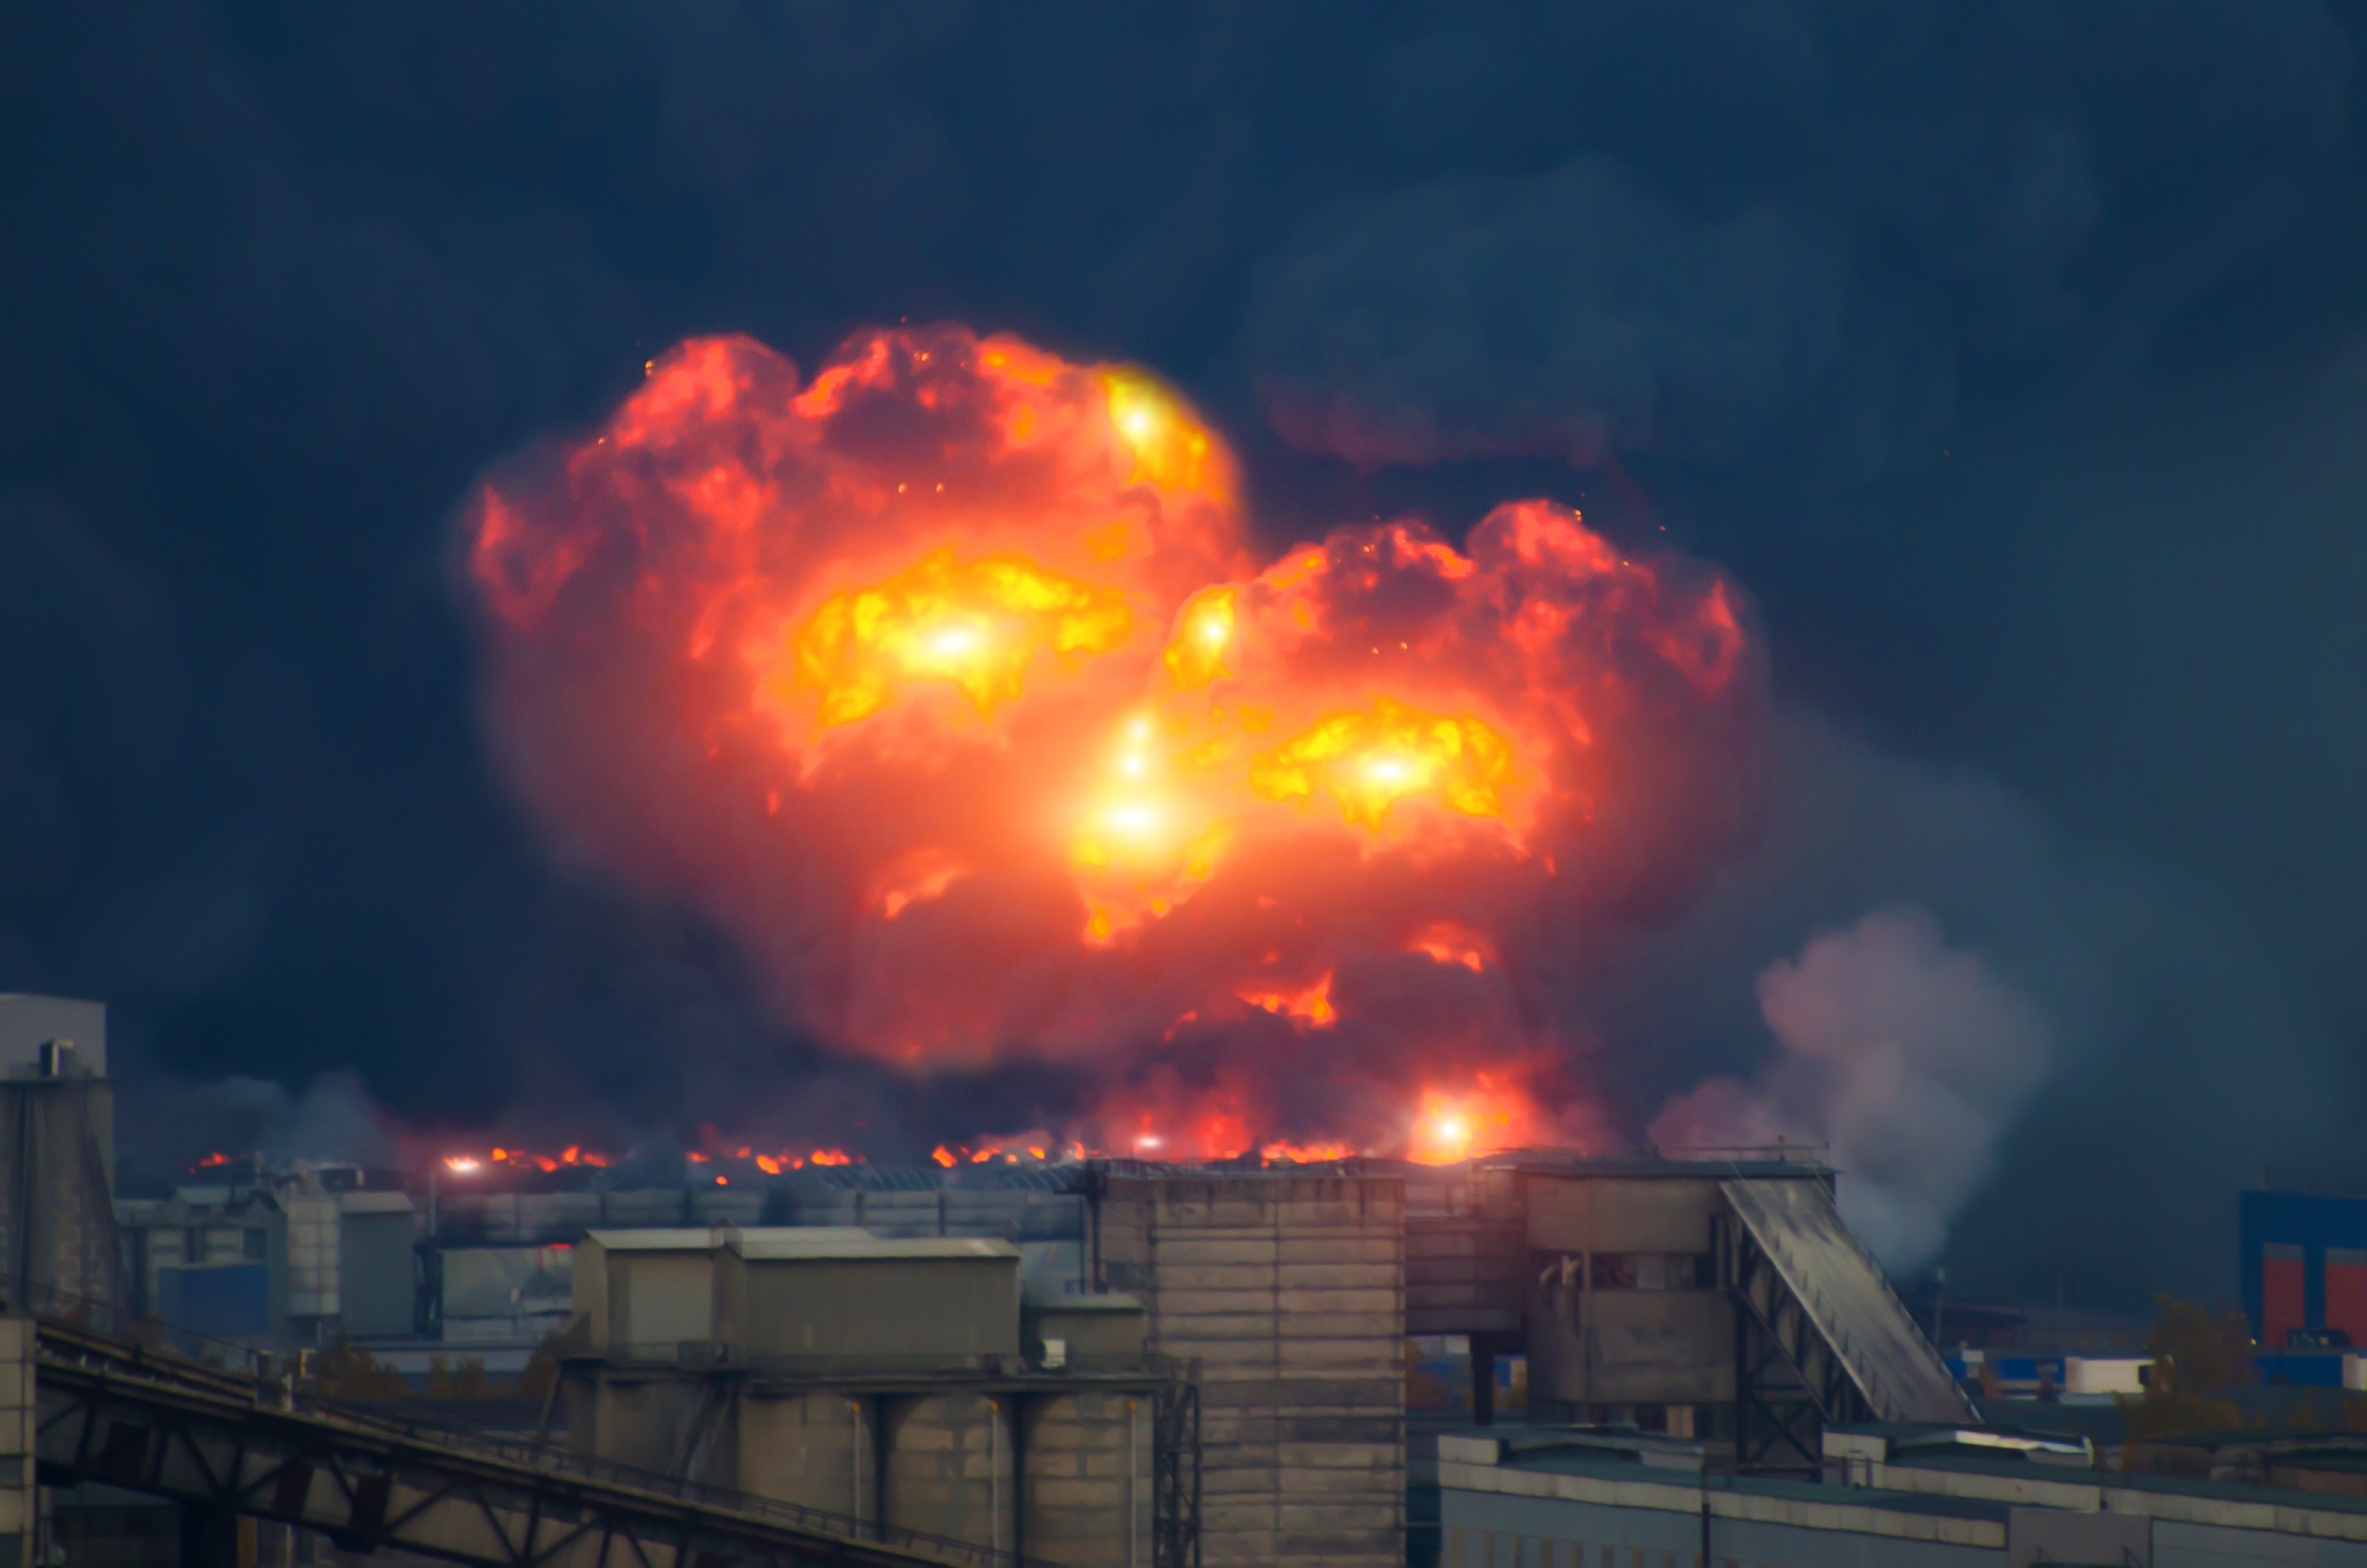 explosion-over-industrial-area.jpg